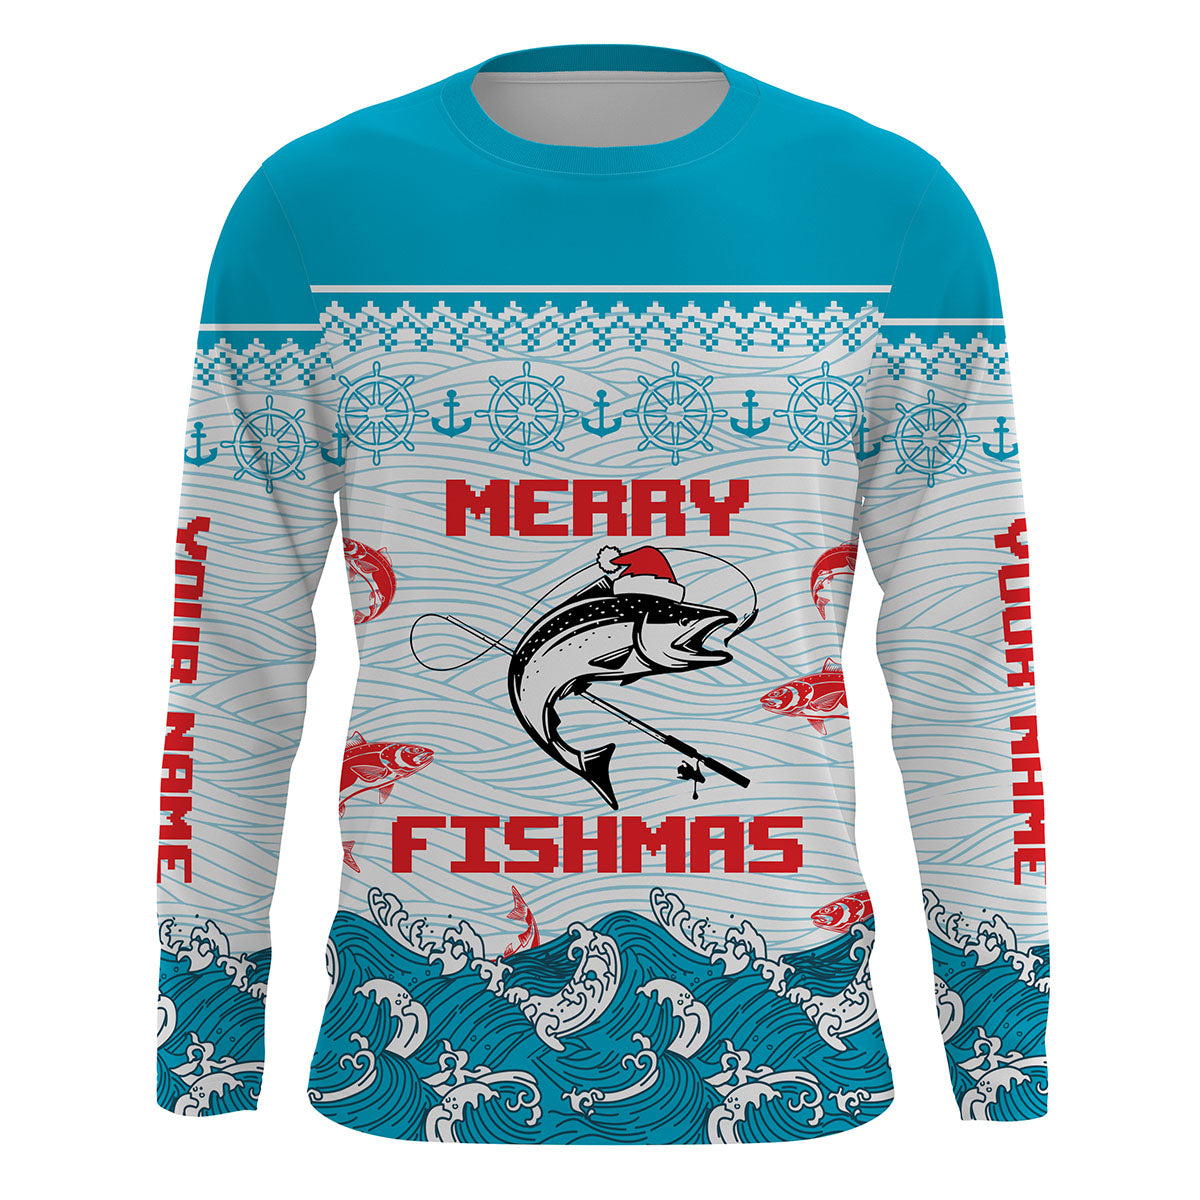 Salmon Fishing Funny Merry Fishmas Christmas pattern Fishing Shirts, Christmas Fishing gifts - TTN17